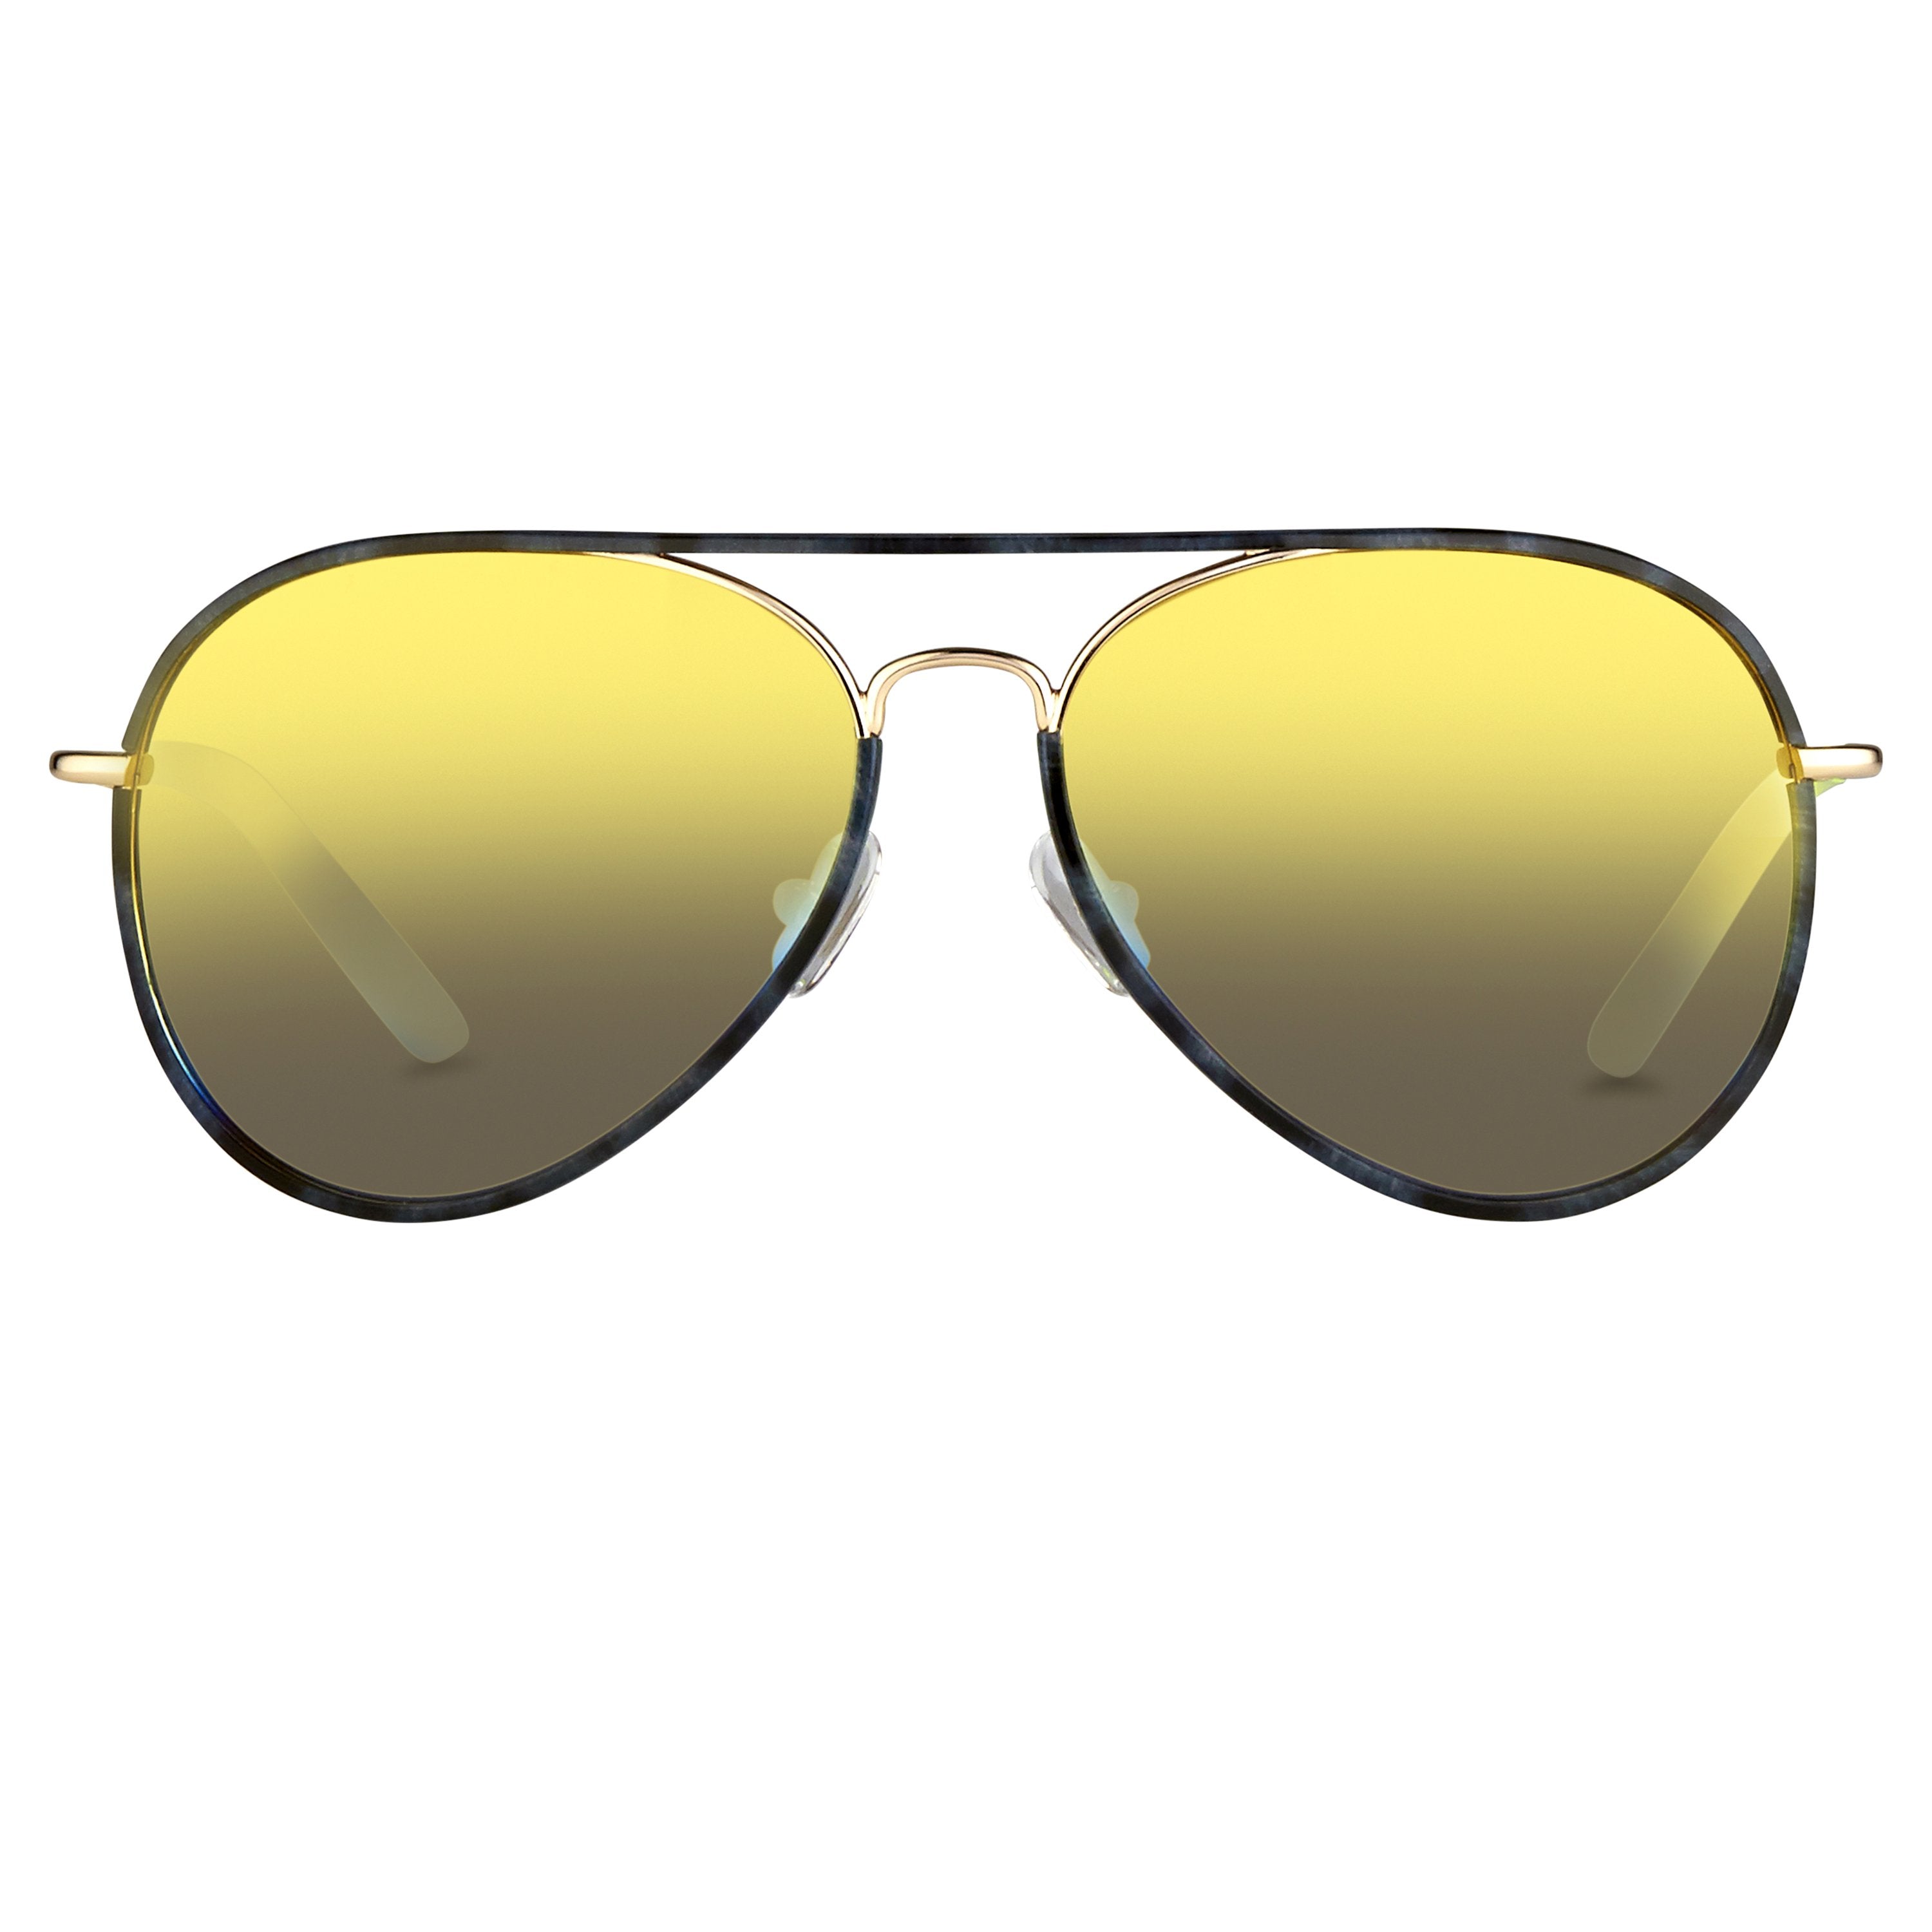 Color_MW154C4SUN - Matthew Williamson 154 C4 Aviator Sunglasses